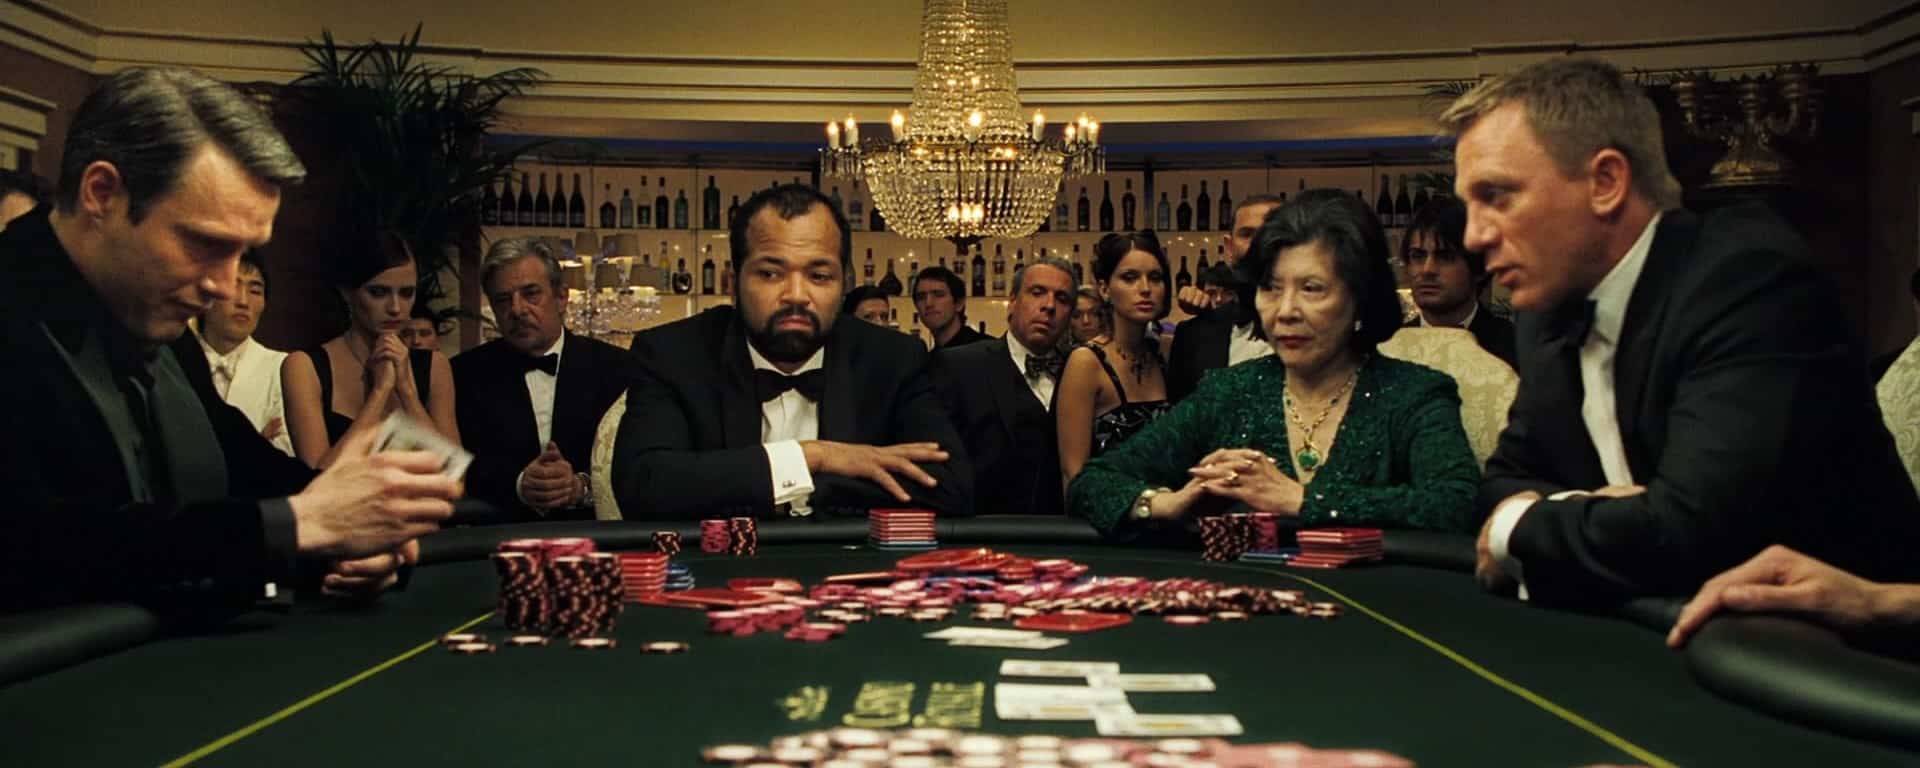 casino royale card scene